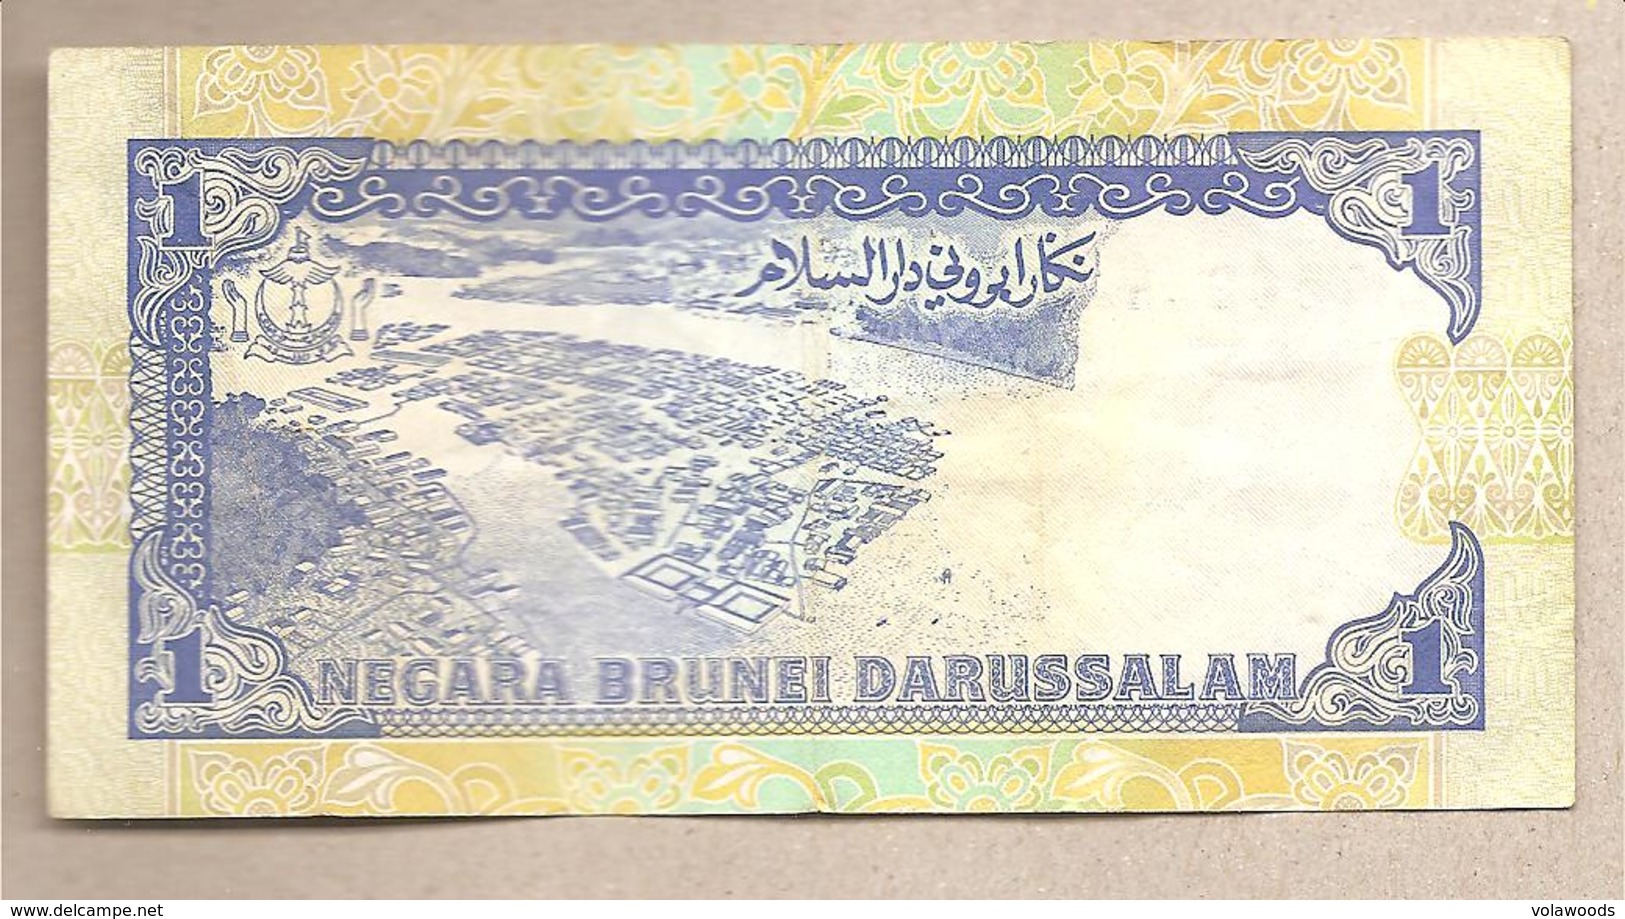 Brunei - Banconota Circolata Da 1 Dollaro - 1989 - Brunei